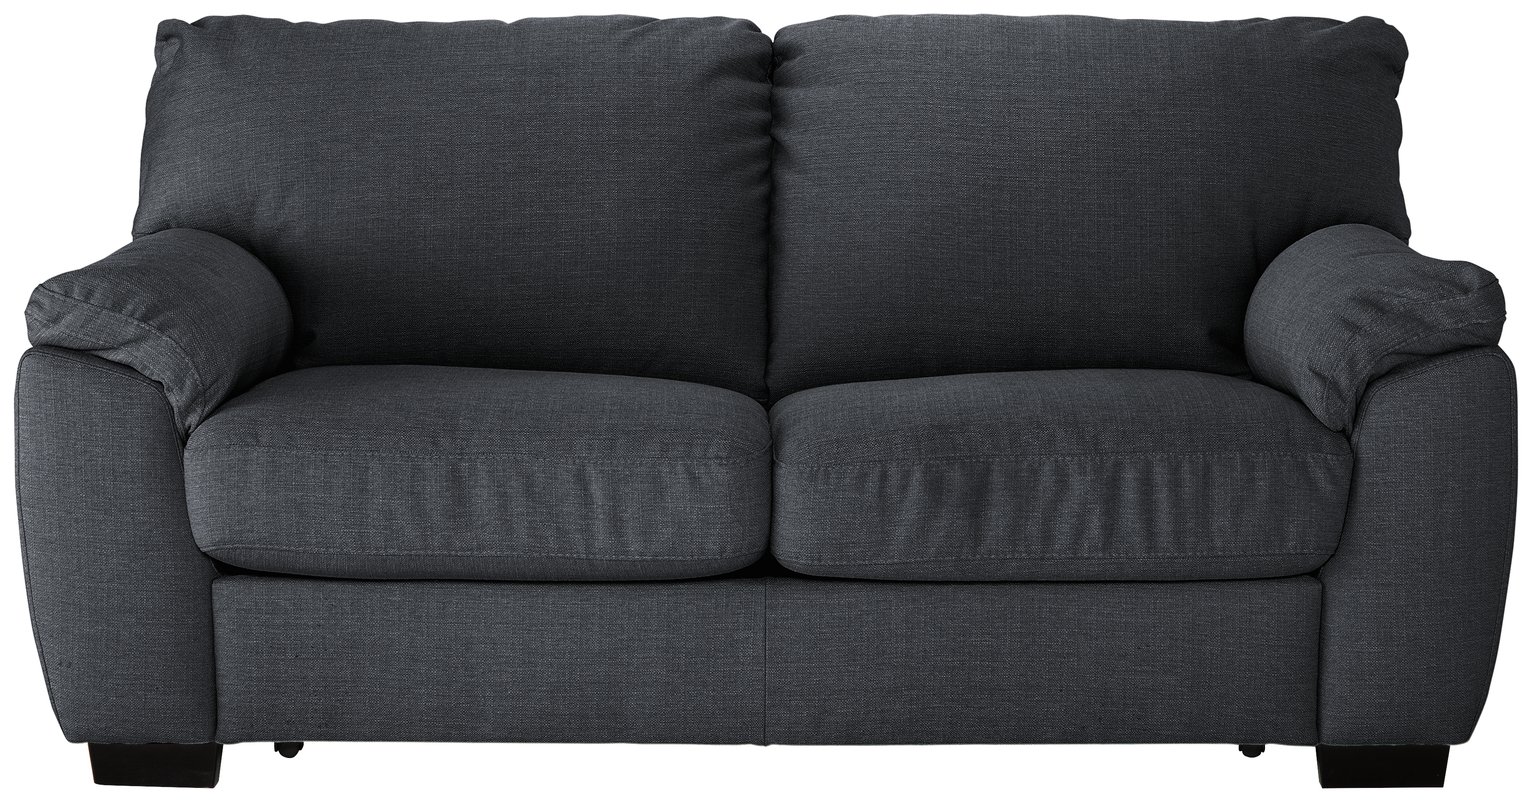 Argos Home Milano Fabric 2 Seater Sofa Bed - Anthracite